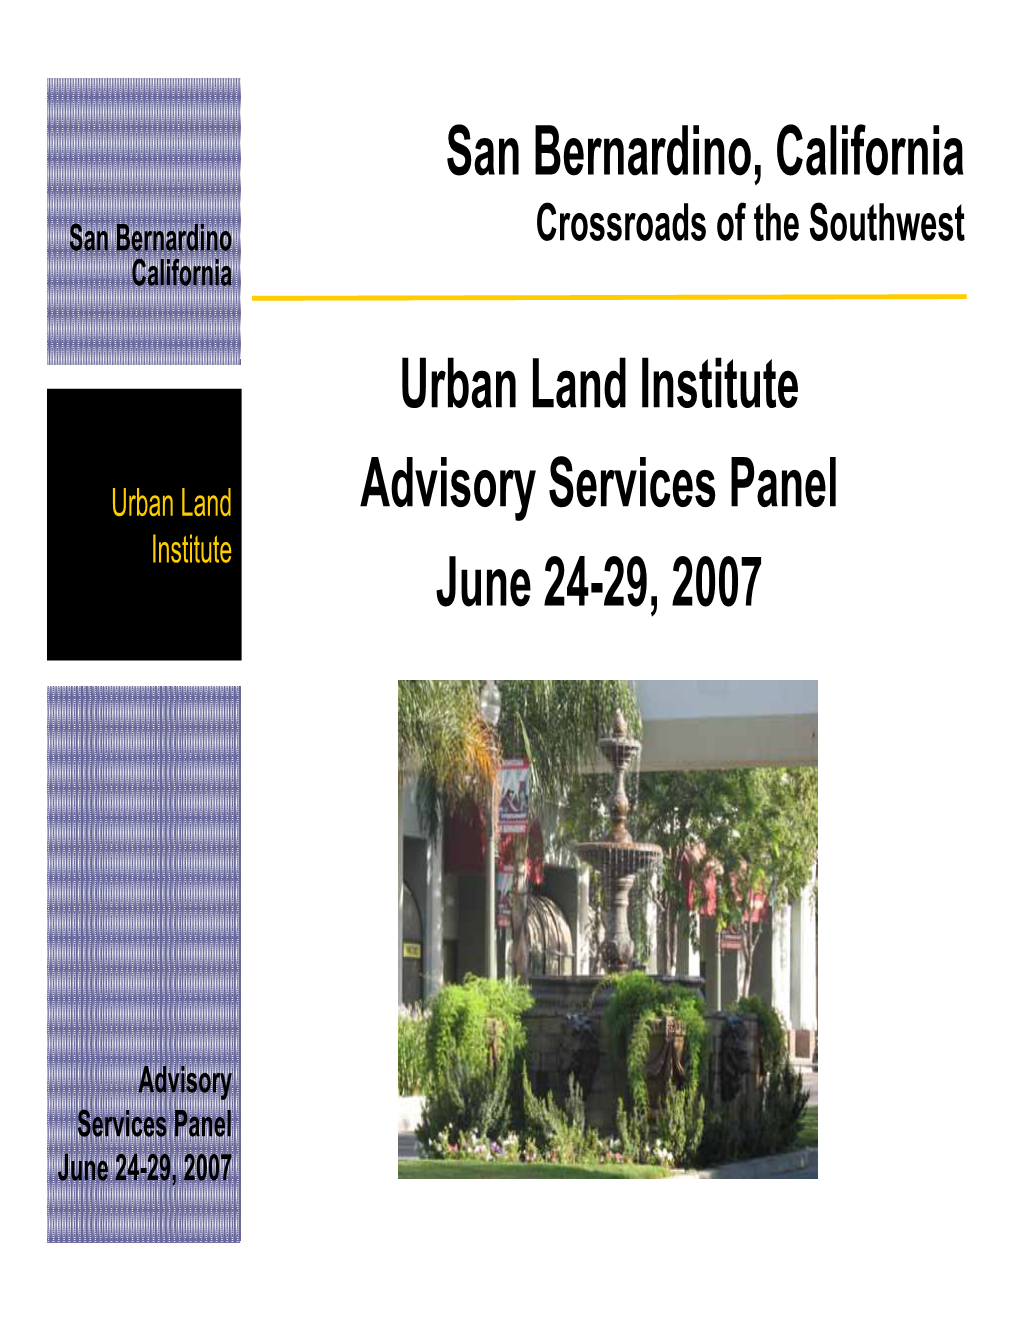 Urban Land Institute Advisory Services Panel June 24-29, 2007